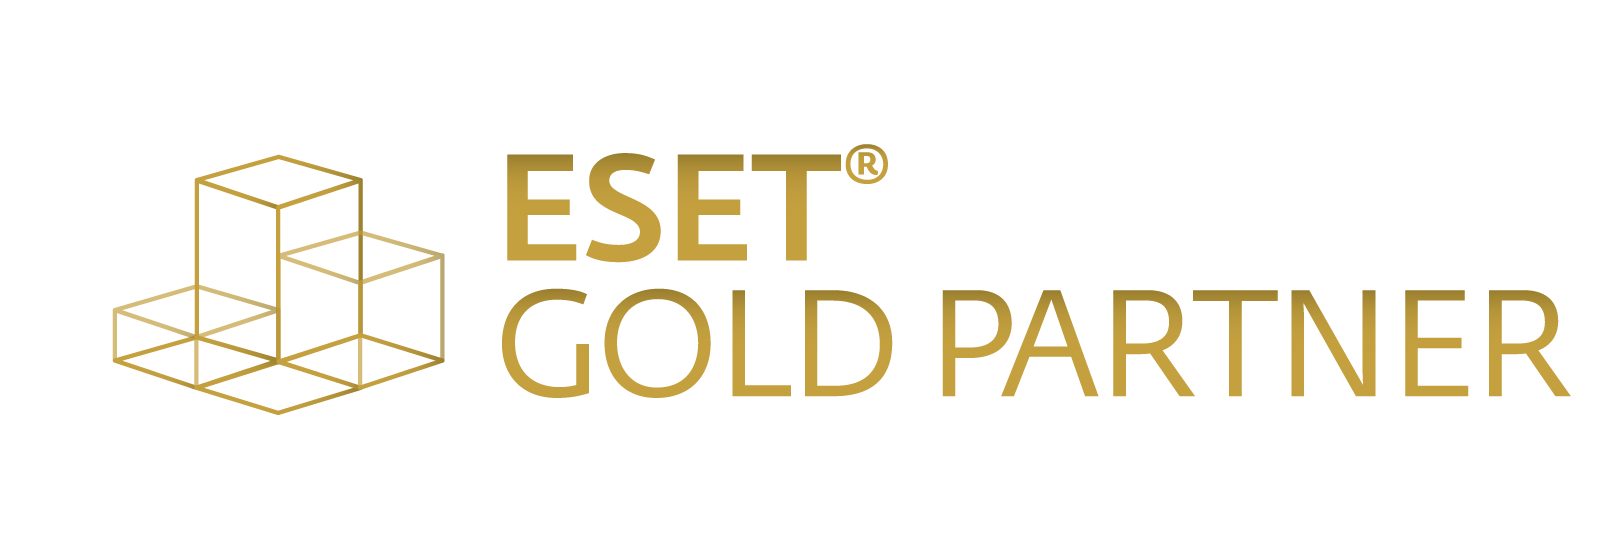 Eset Gold Partner